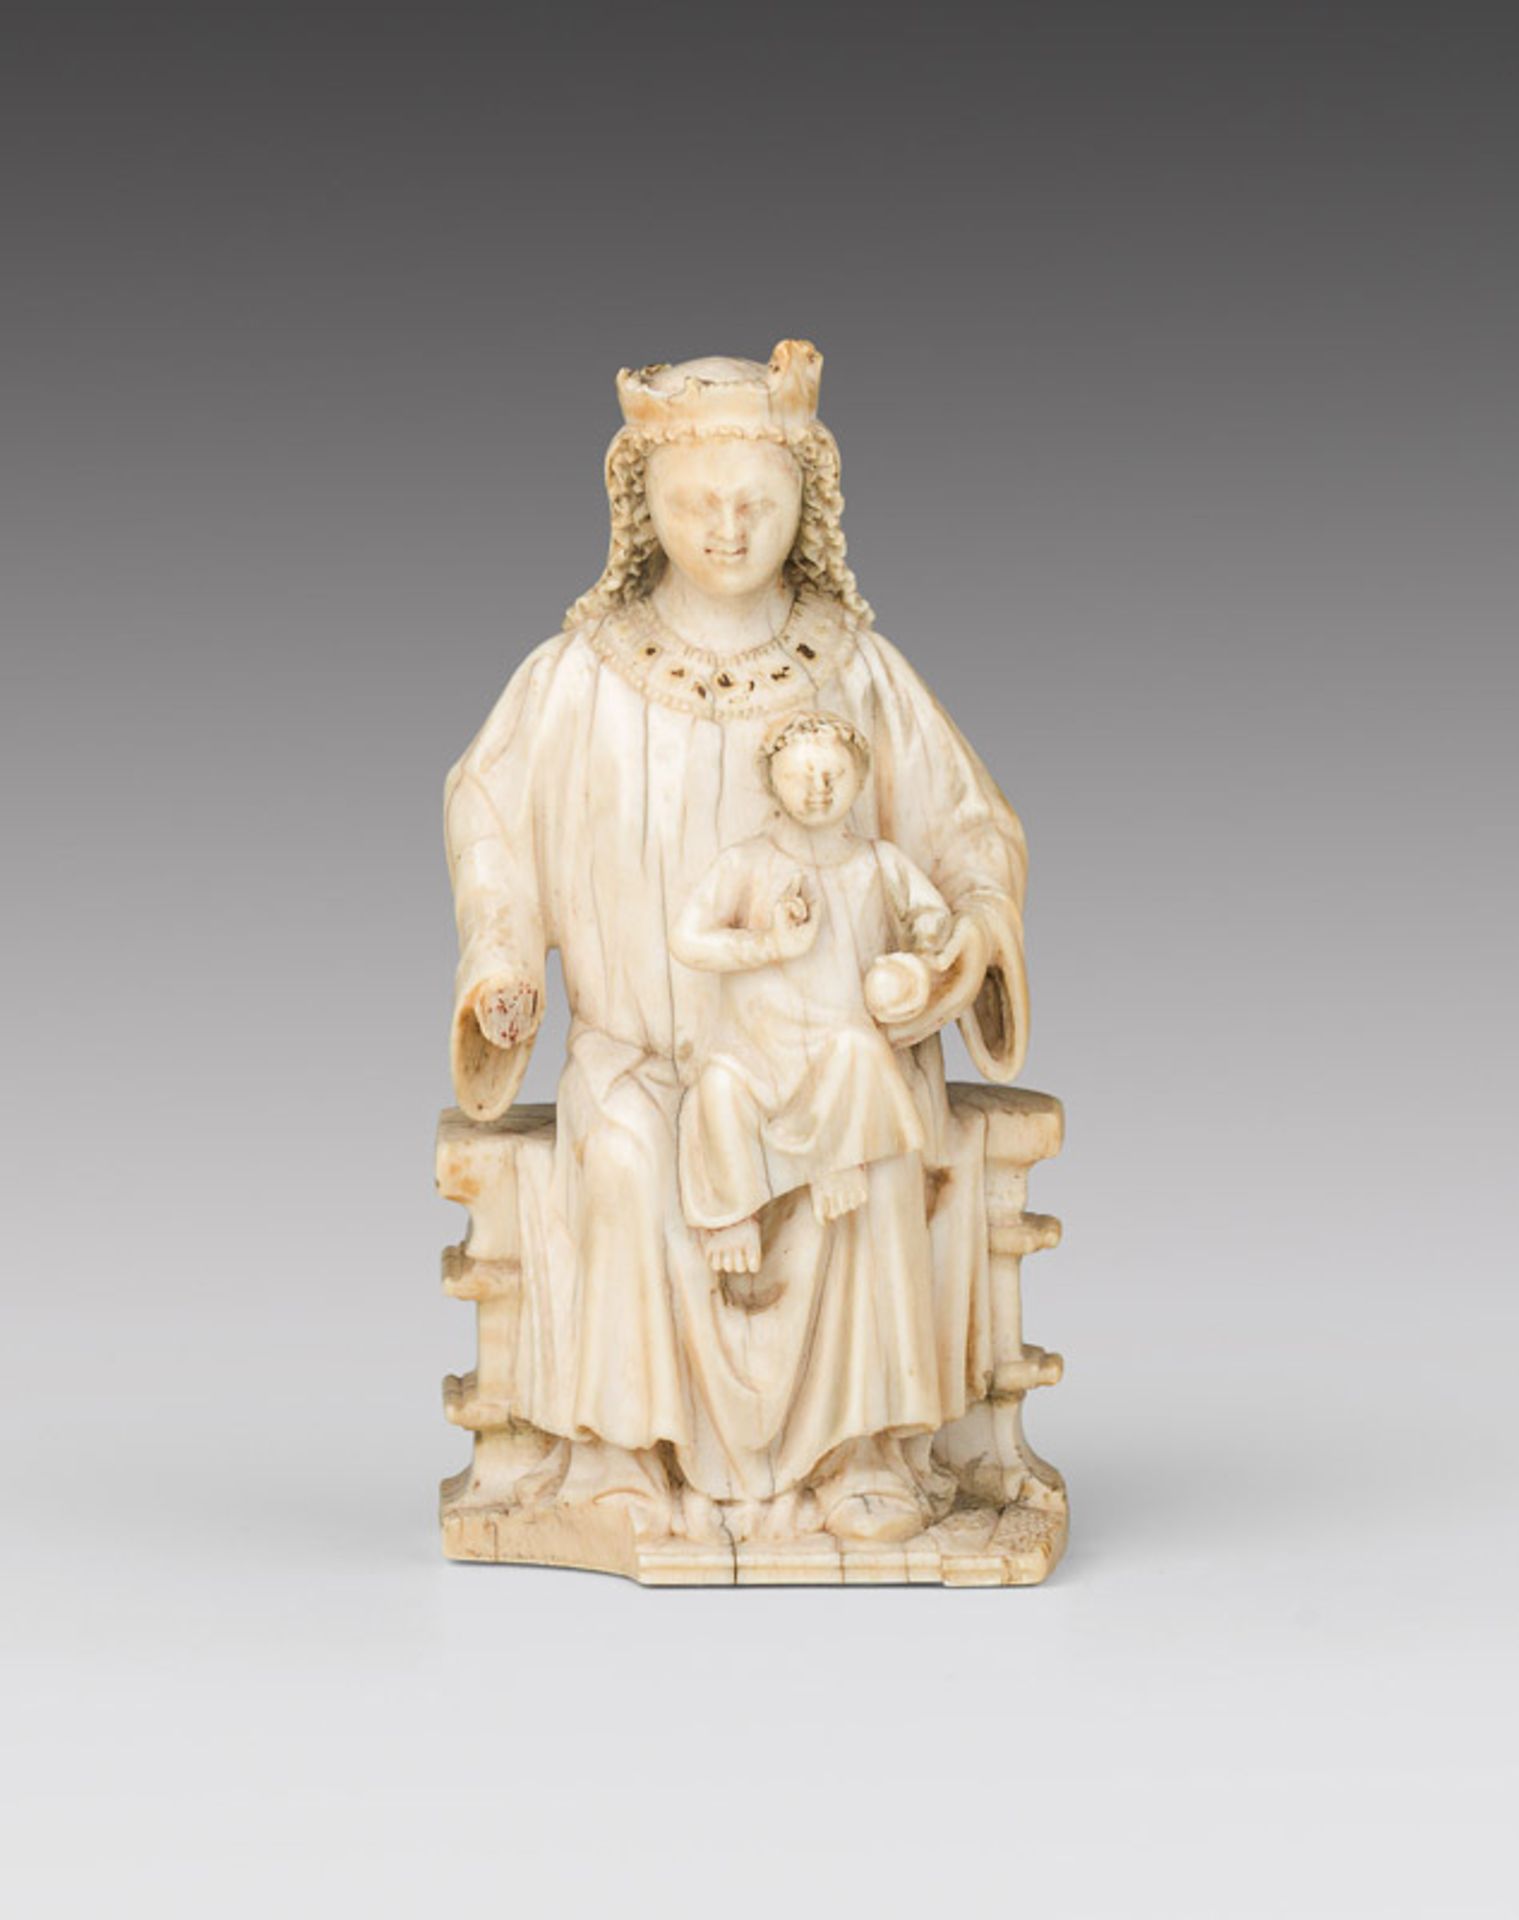 Madonna with child, Flemish, c. 1380